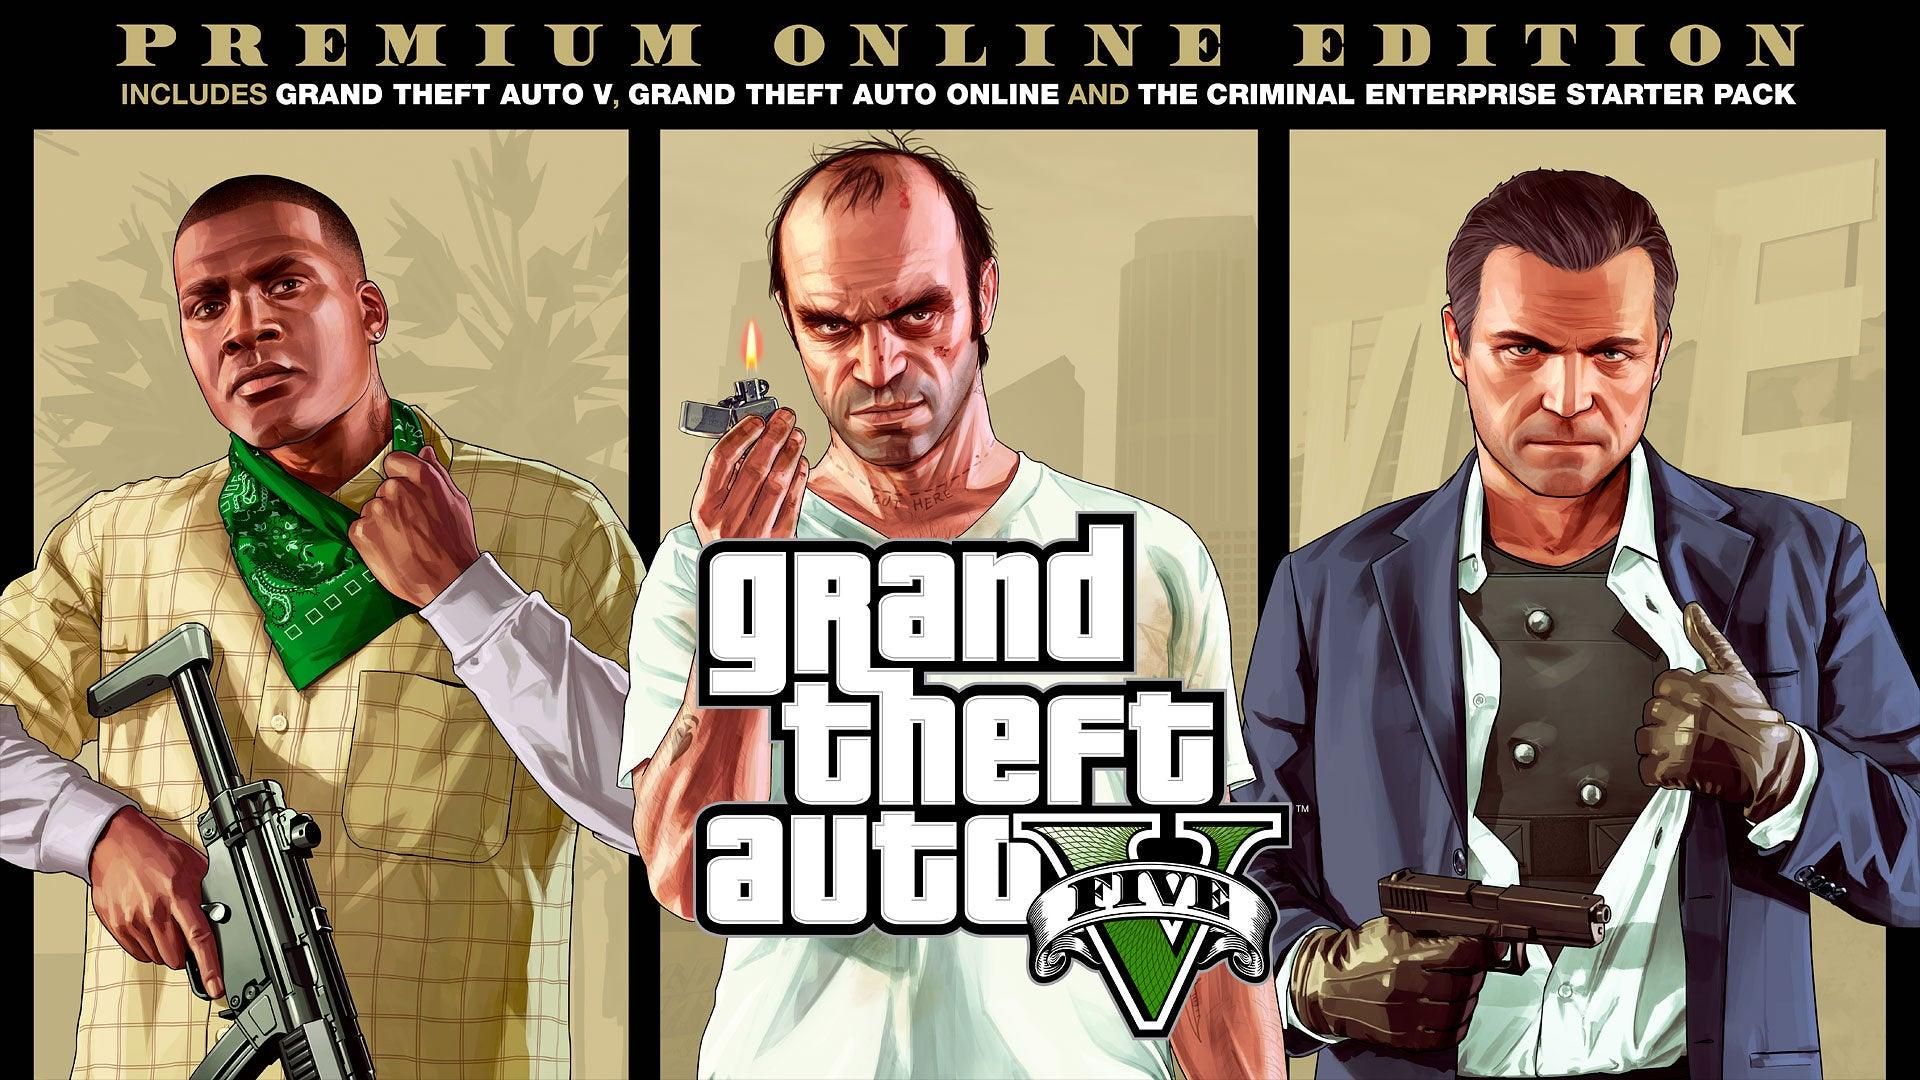 Grand Theft Auto V - validvalley.com - Chave de CD do Rockstar GL, Chiave CD Rockstar GL, Rockstar GL CD Anahtarı, Rockstar GL CD Schlüssel